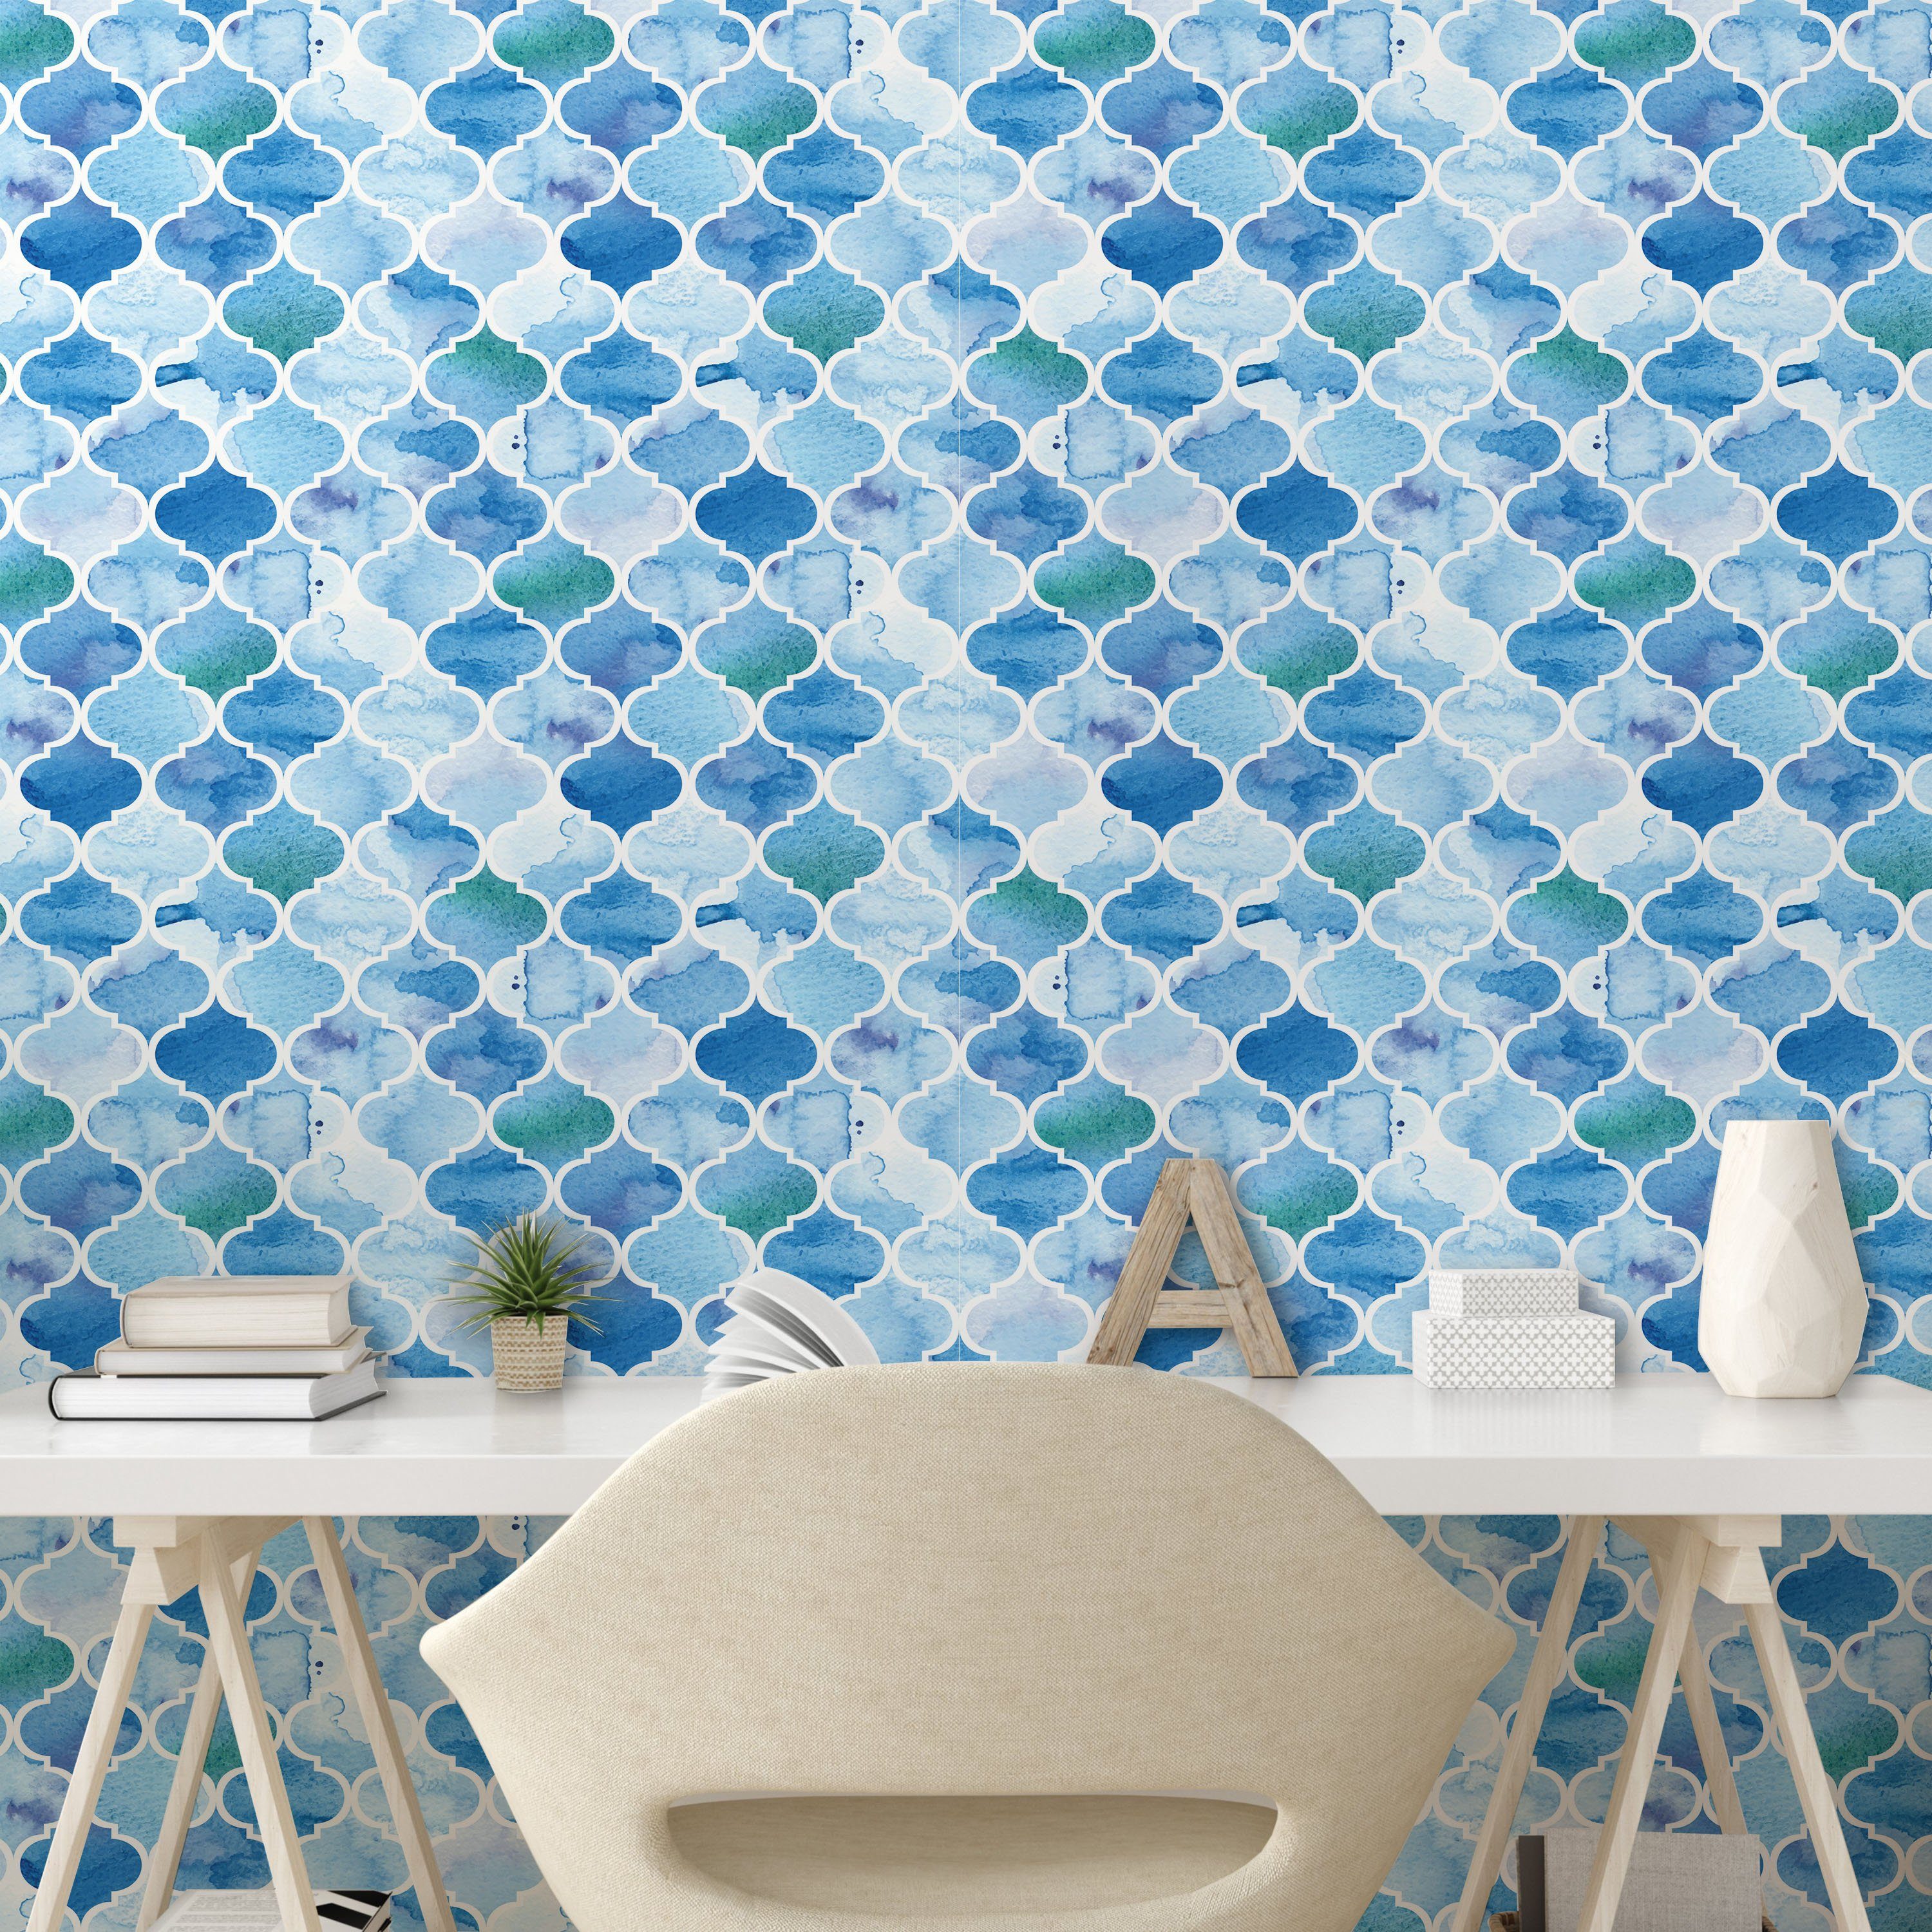 Abakuhaus Vinyltapete marokkanisch Wohnzimmer Mosaik-Muster Küchenakzent, selbstklebendes